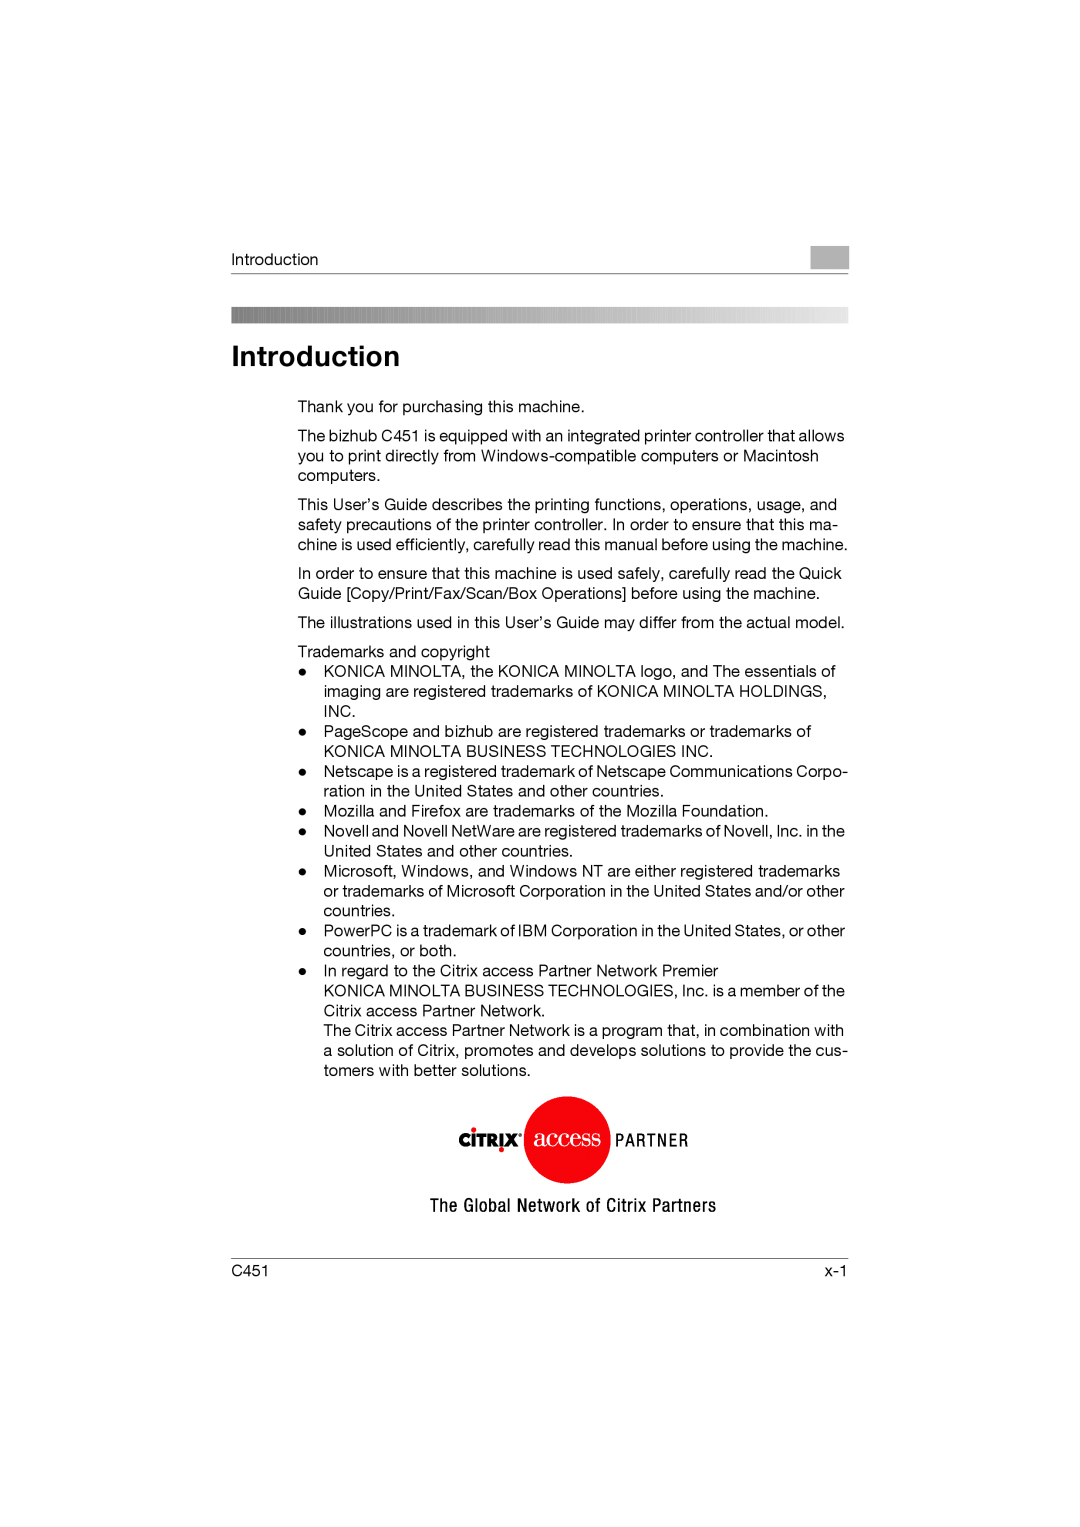 Konica Minolta C451 manual Introduction 